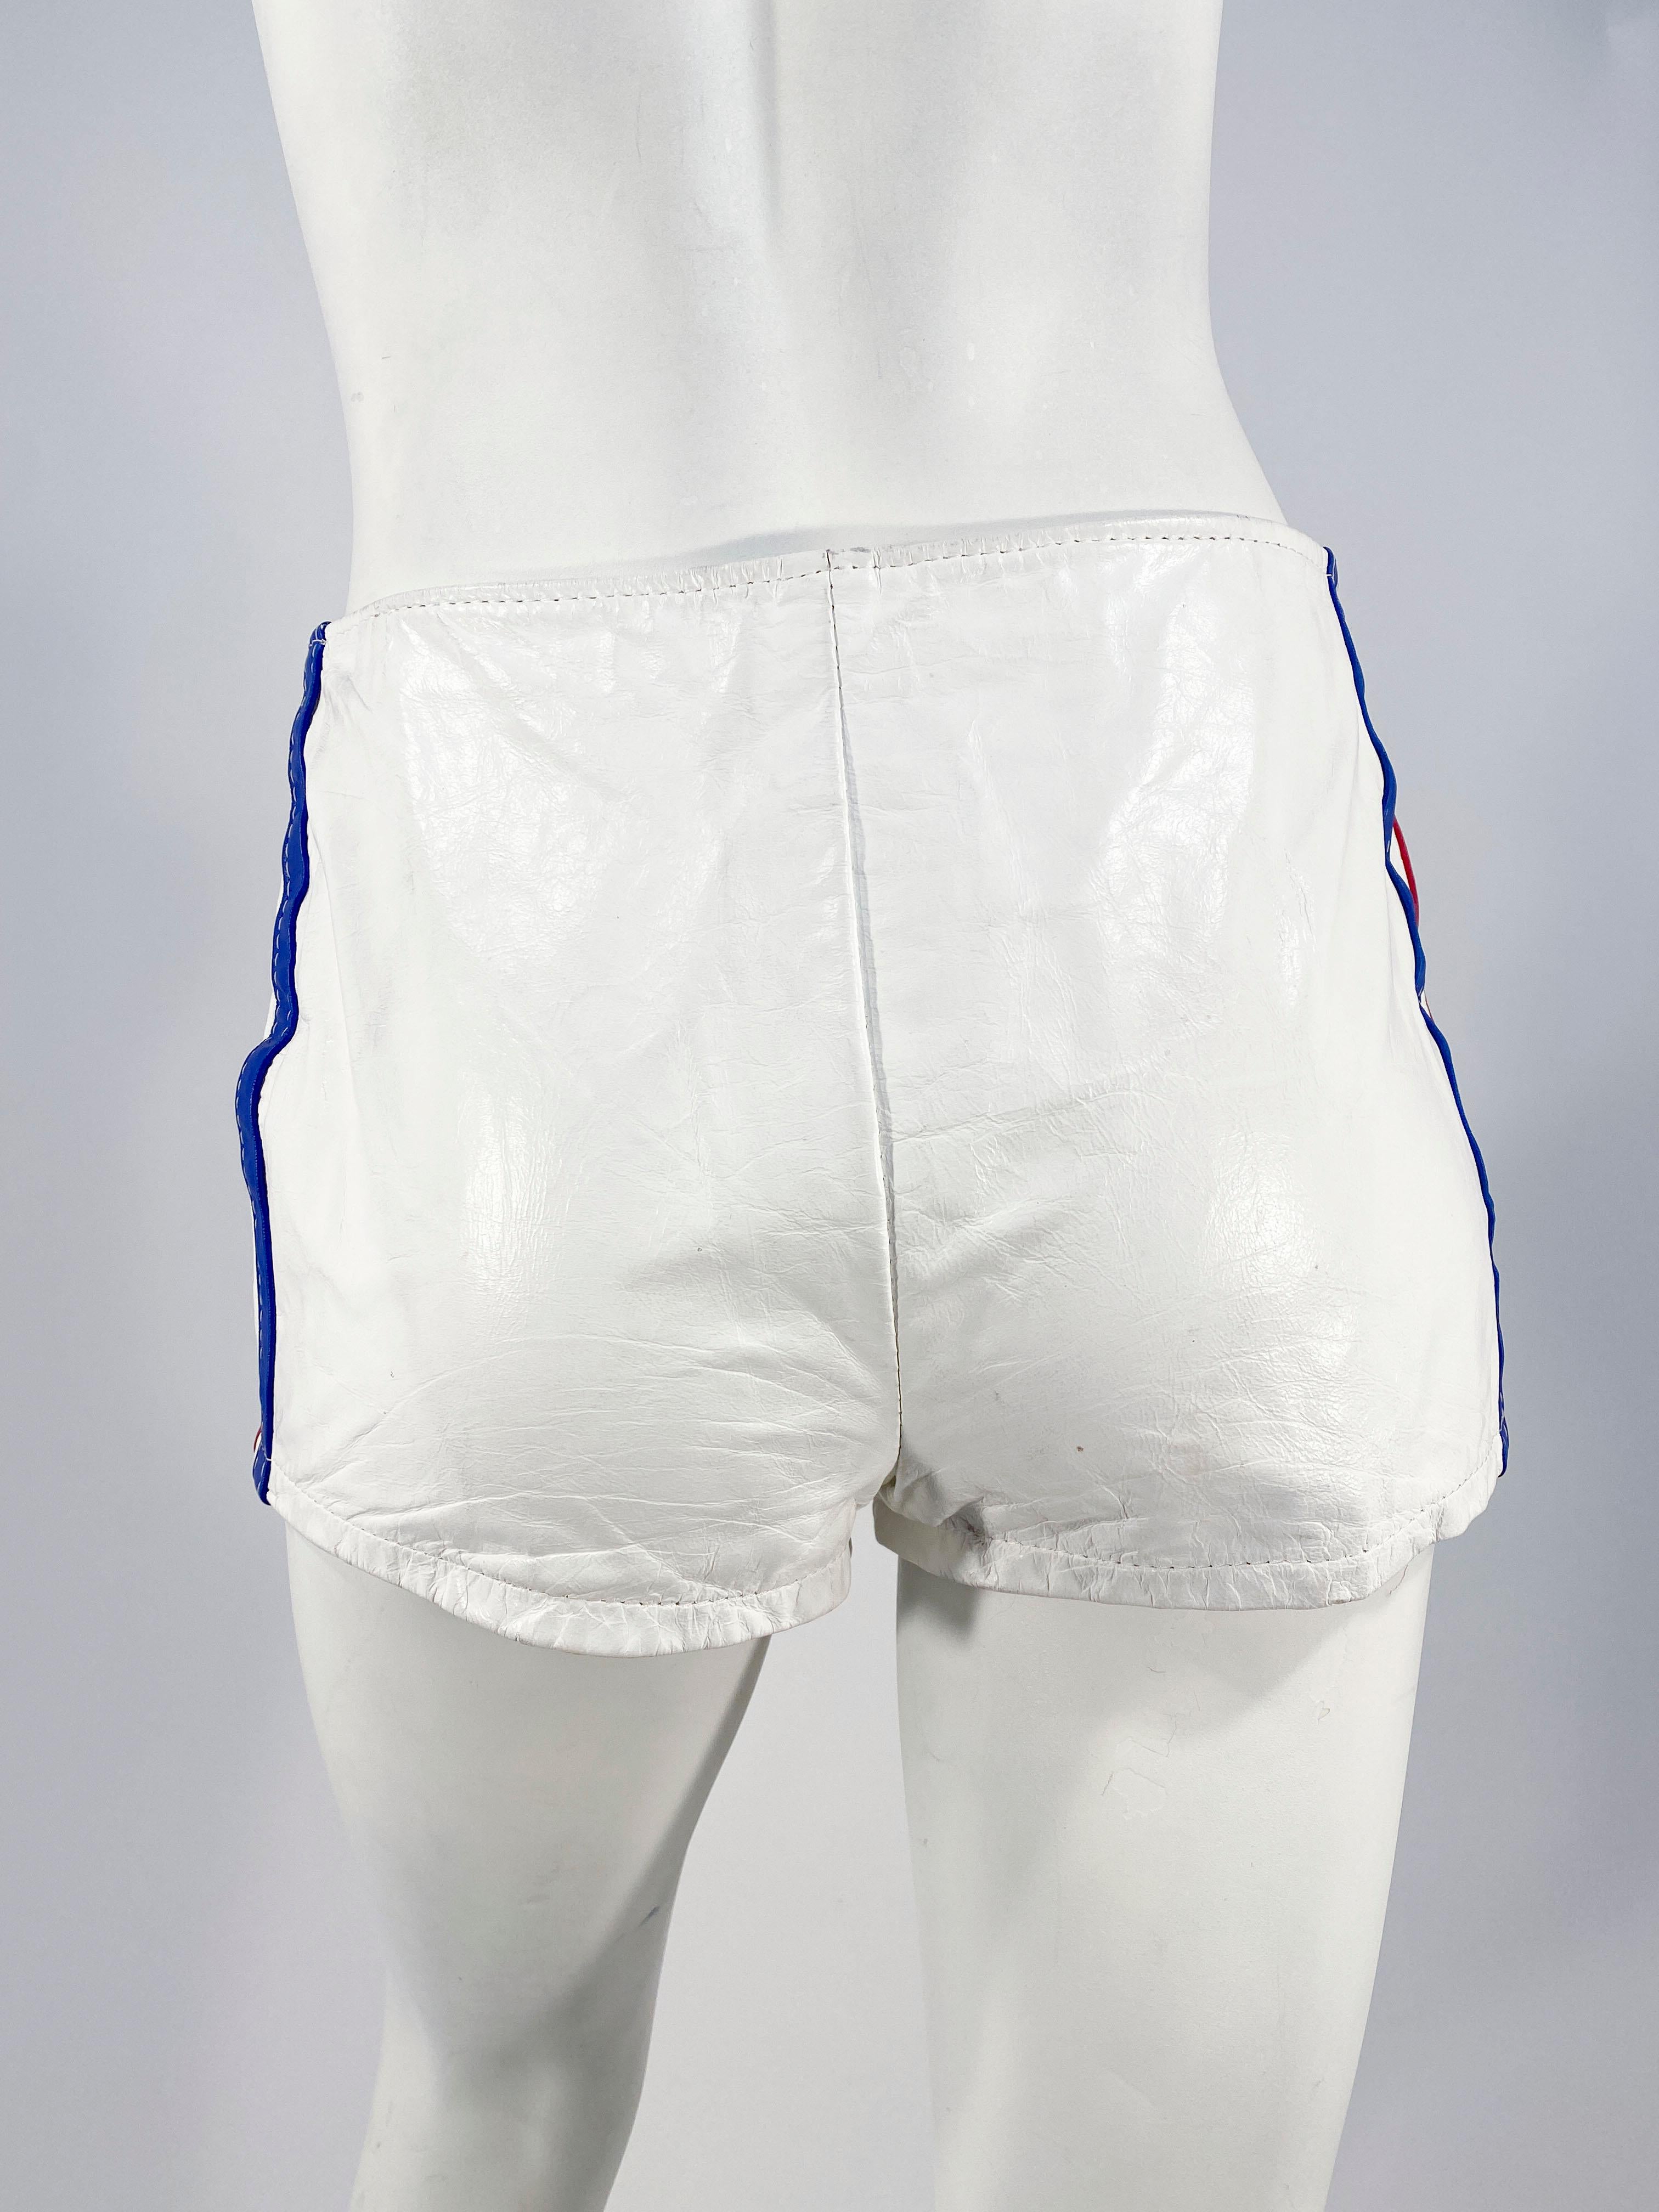 Women's 1960s/1970s White Leather Go-go Shorts